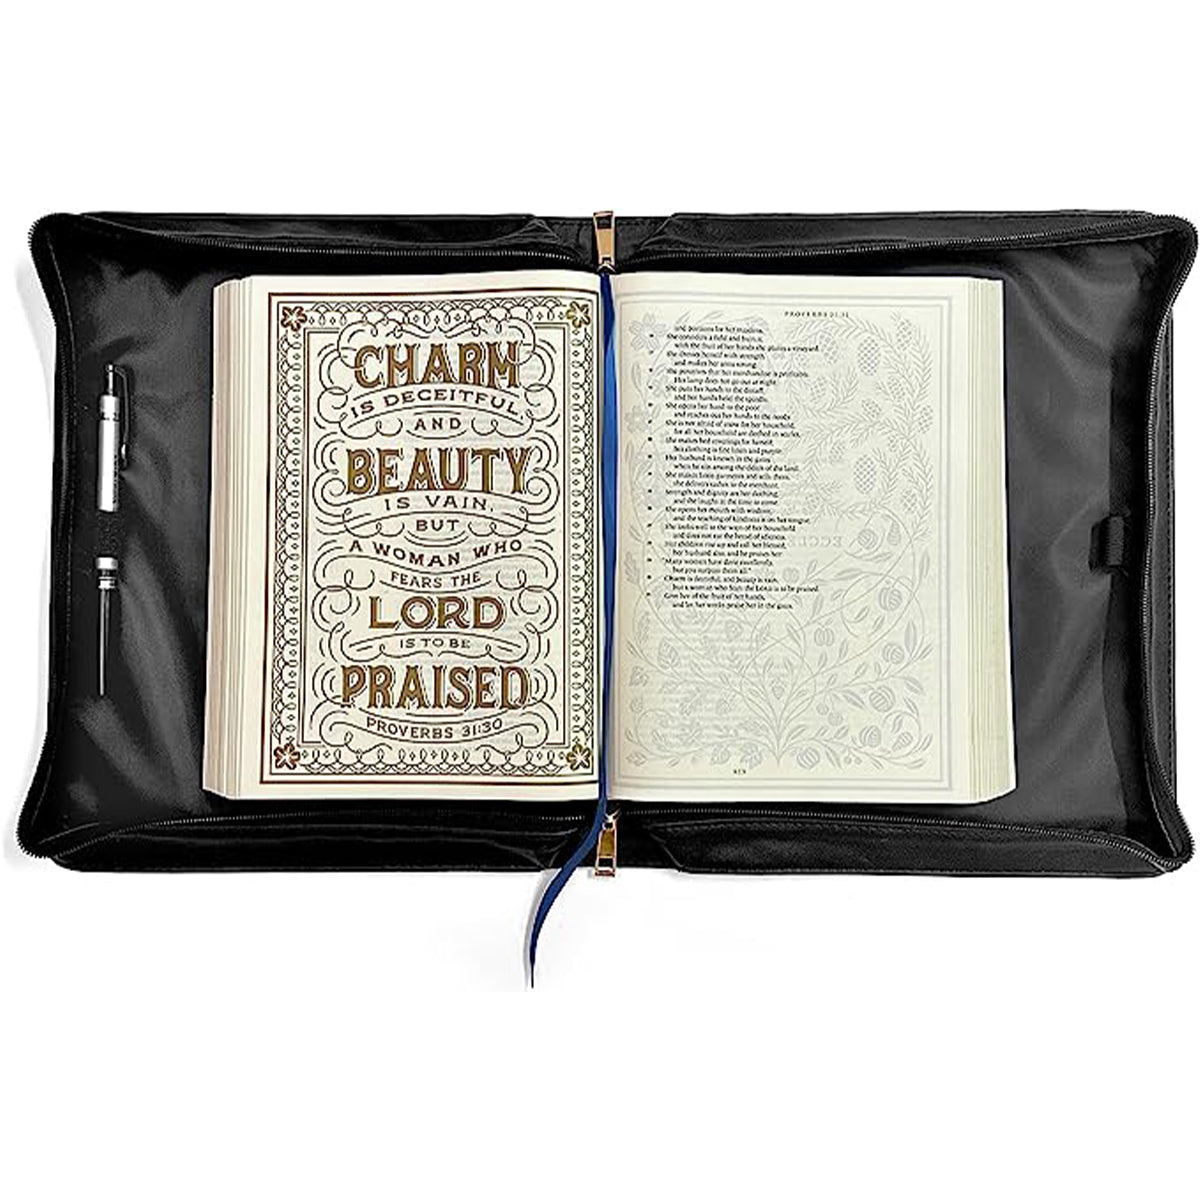 Christianart Bible Cover, 7 Promises Of Jesus, lion and judah, Gifts For Women, Gifts For Men, Christmas Gift. - Christian Art Bag